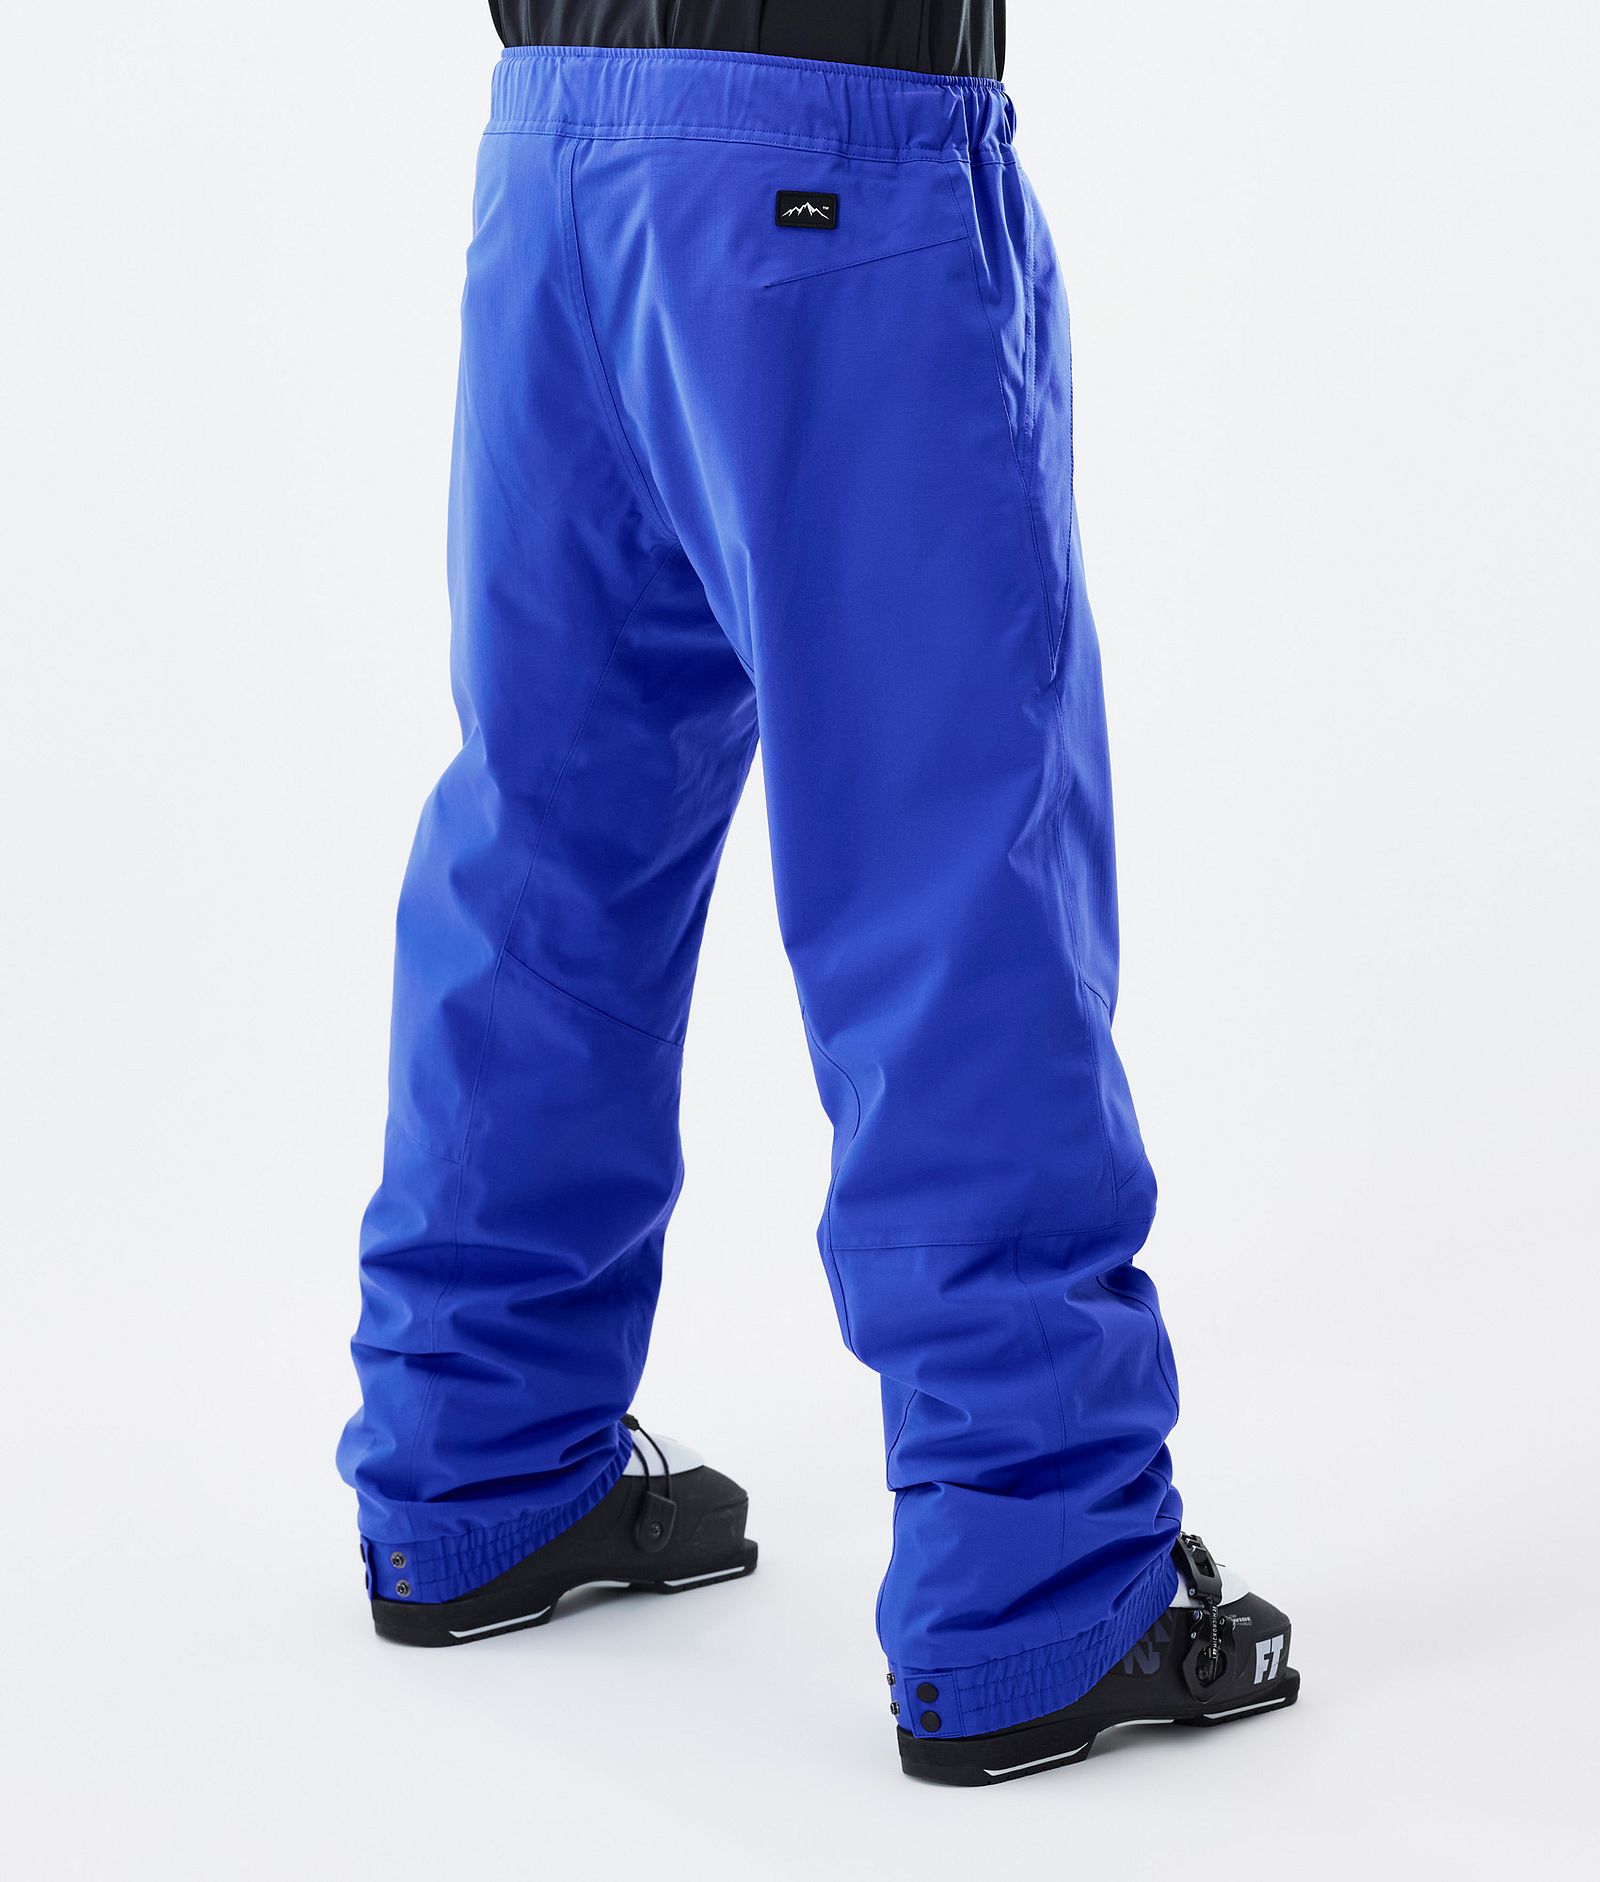 Blizzard Pantaloni Sci Uomo Cobalt Blue